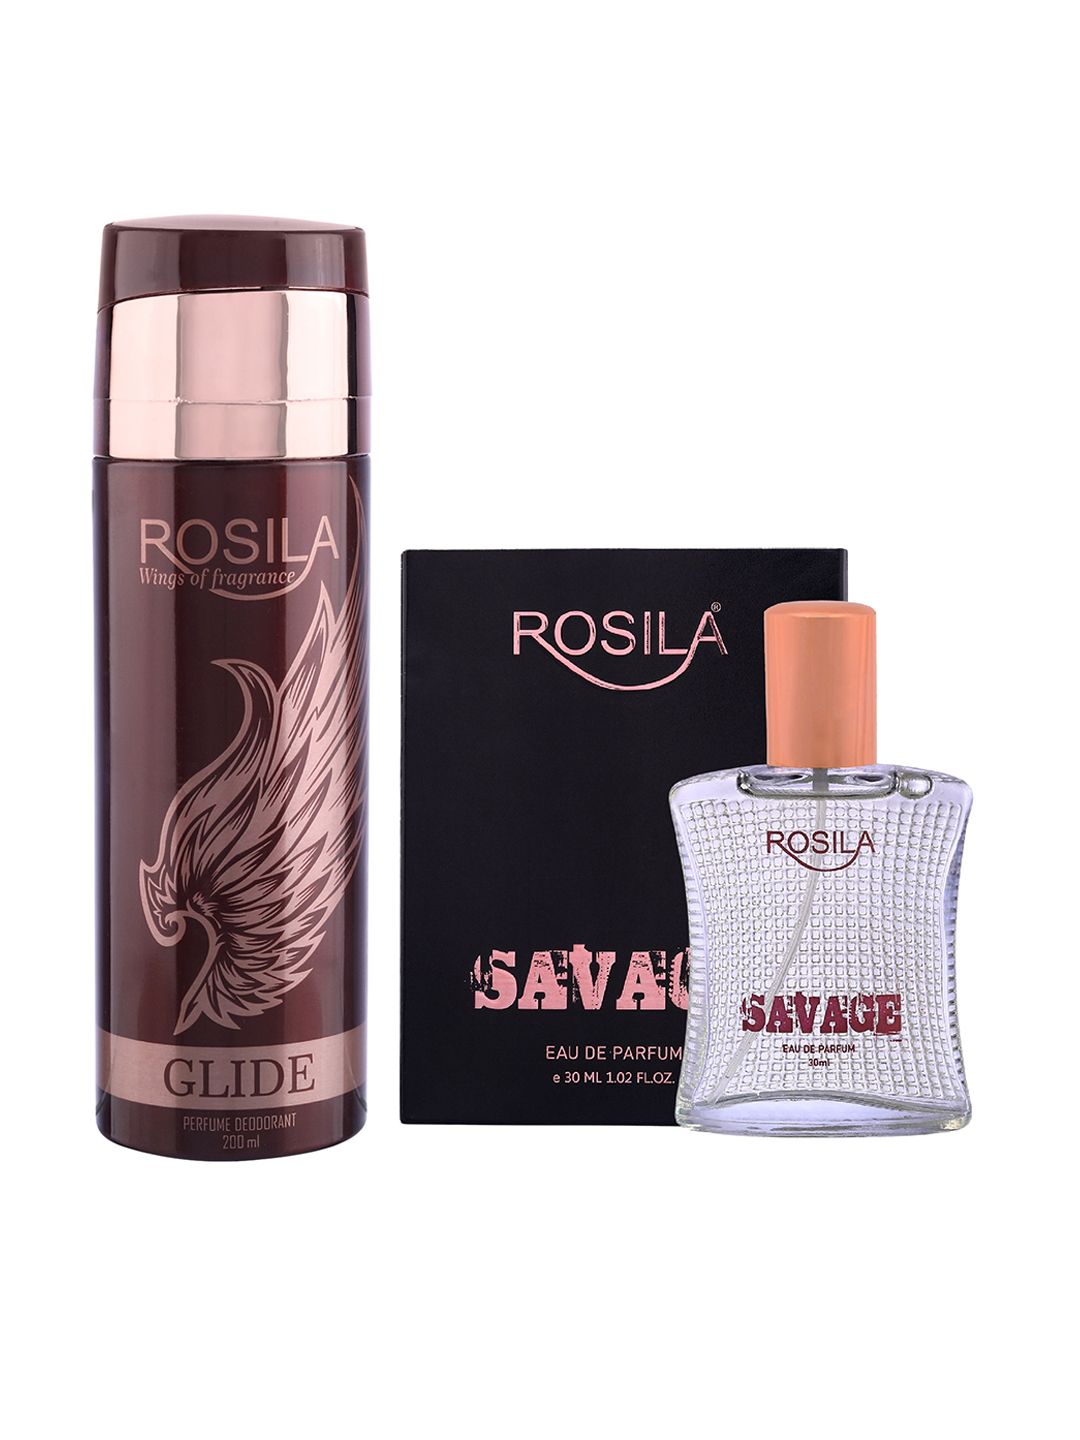 ROSILA Glide Deodorant Body Spray 200ml With Savage Perfumee EDP 30ml Price in India